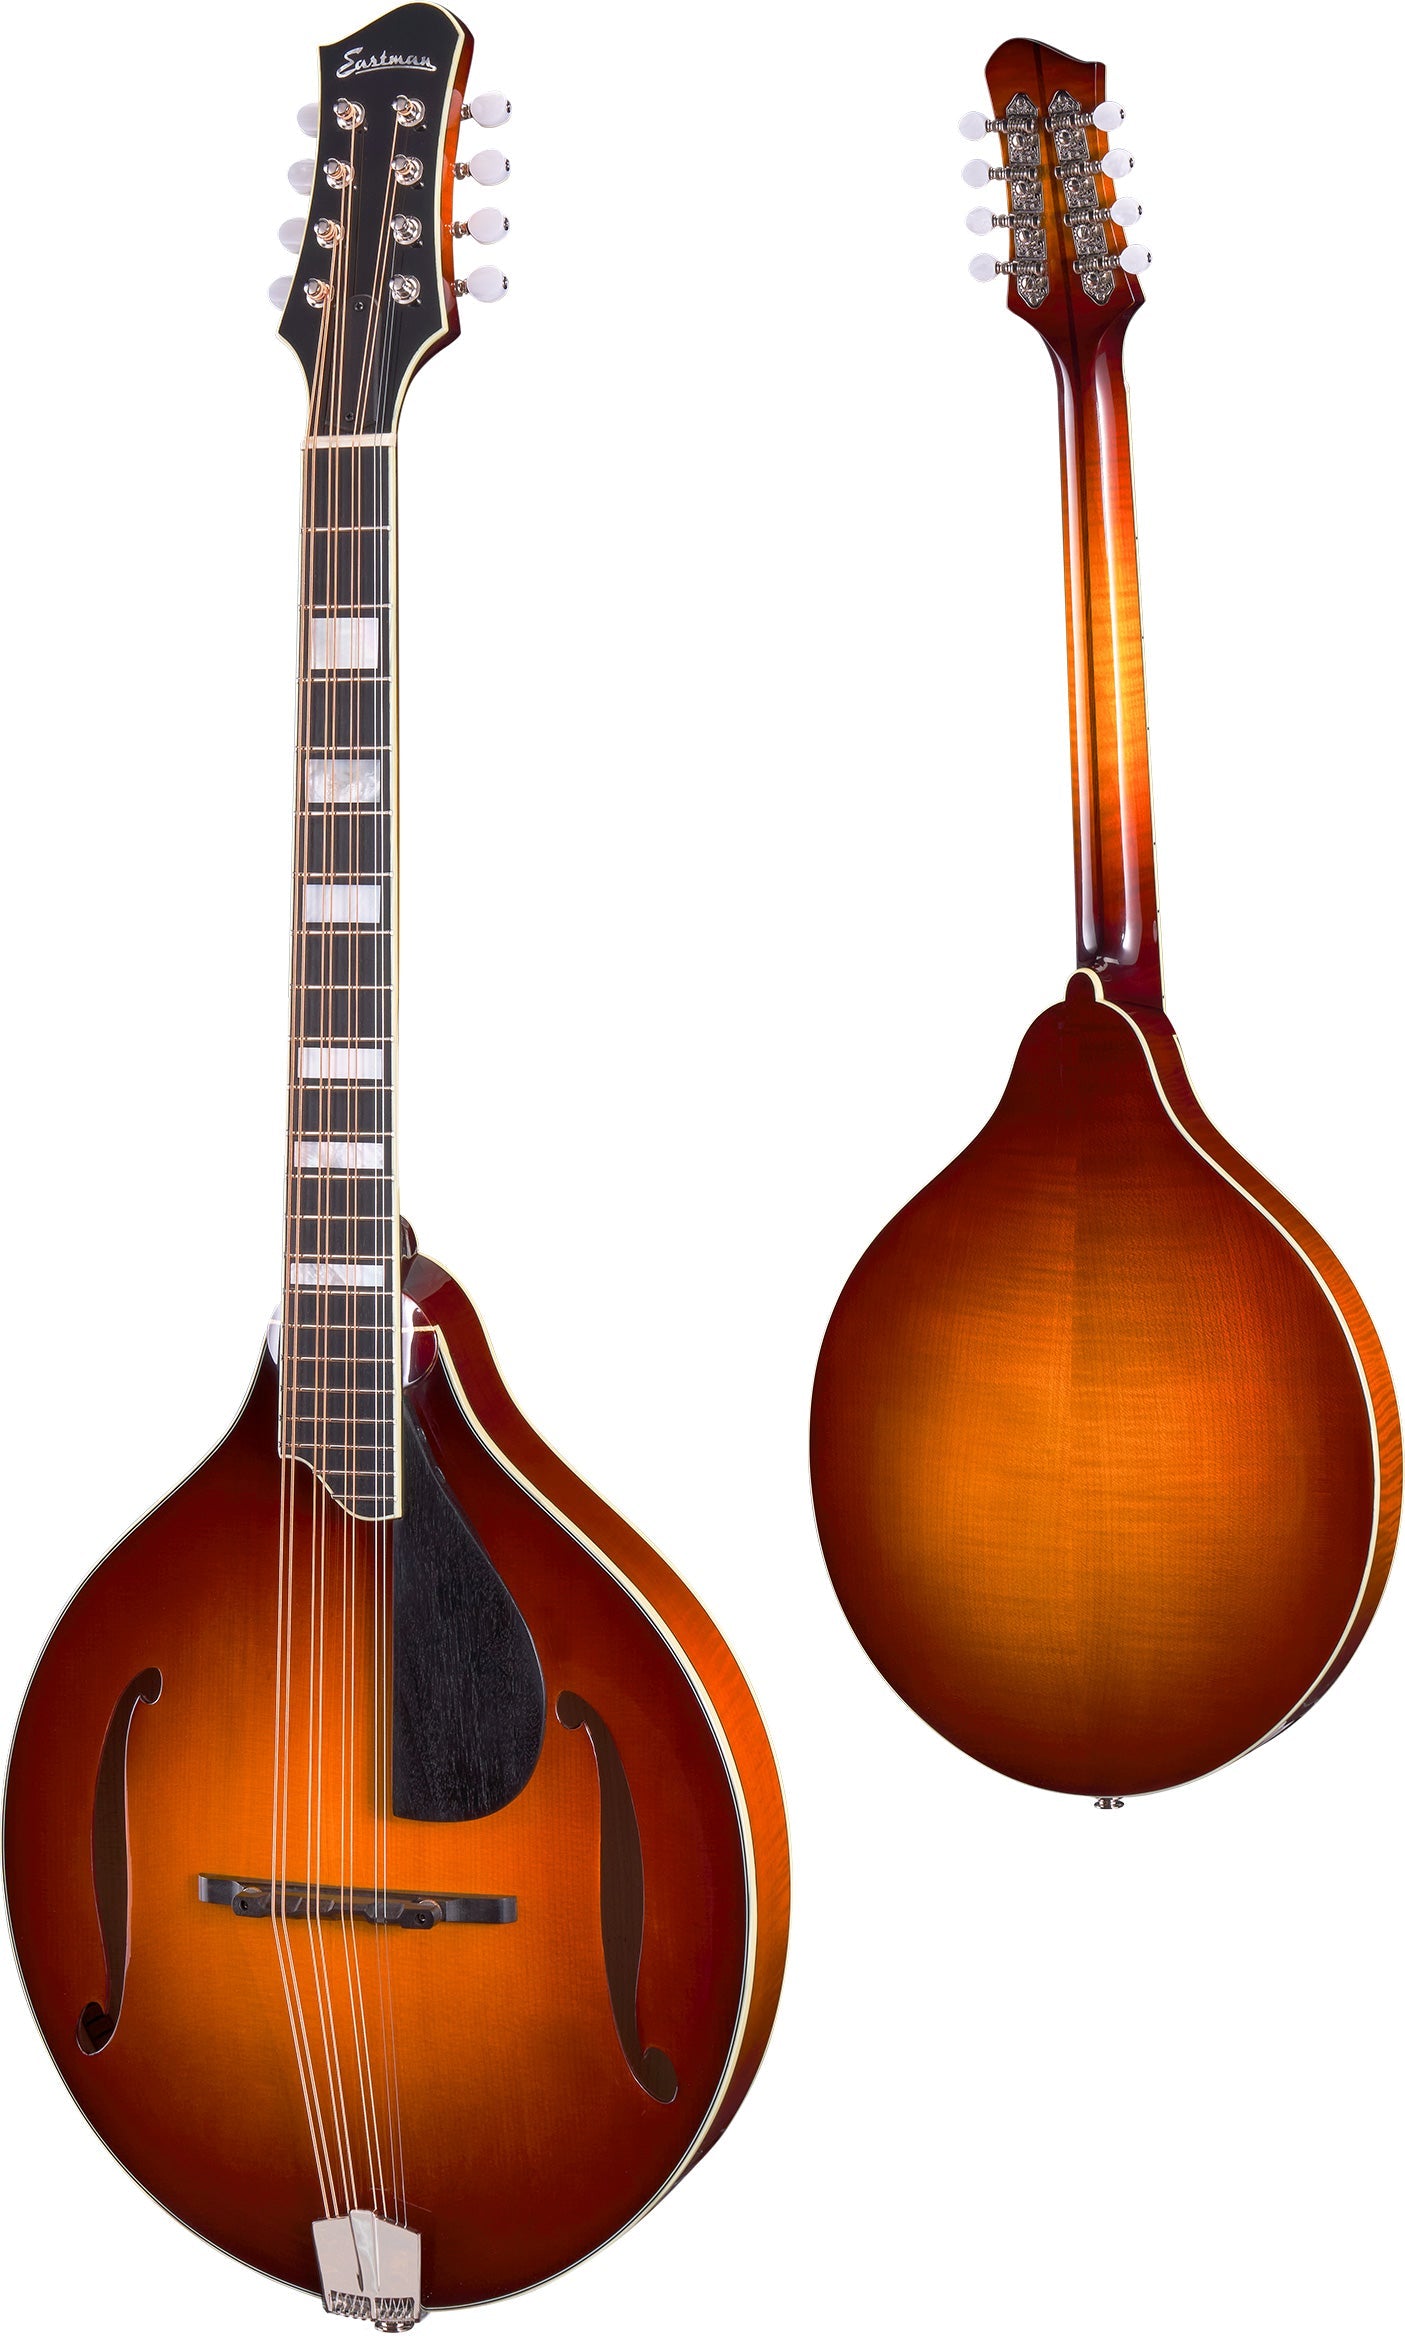 Eastman MDO605-GB Octave Mandolin, Mandolin for sale at Richards Guitars.